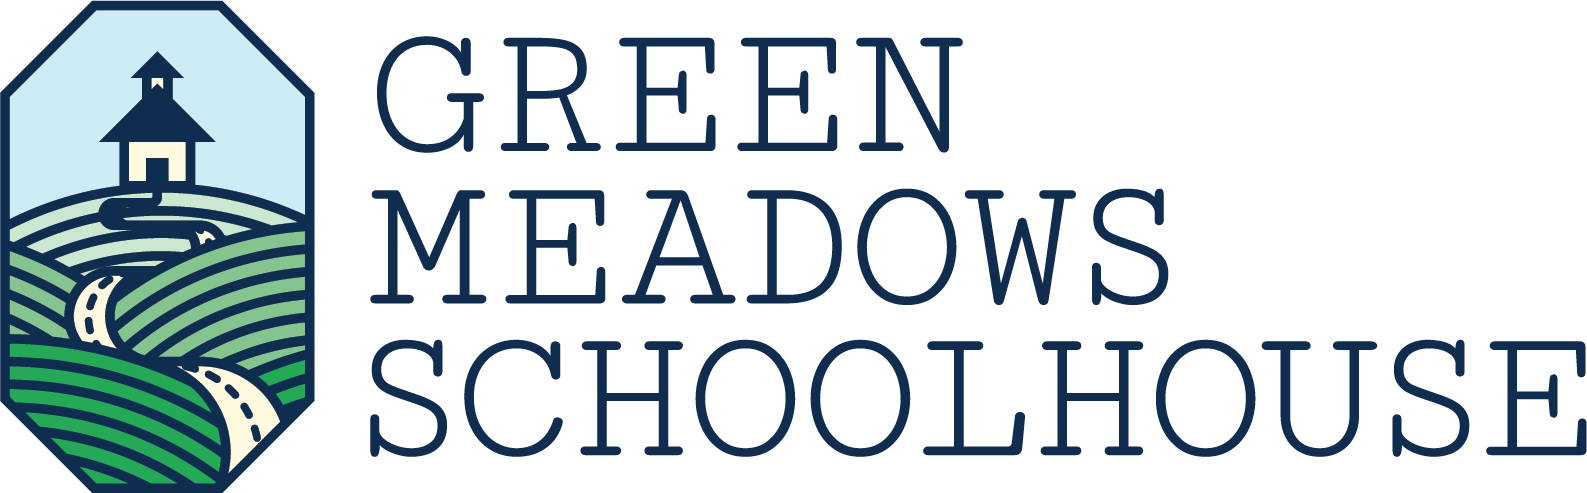 Green Meadows Schoolhouse